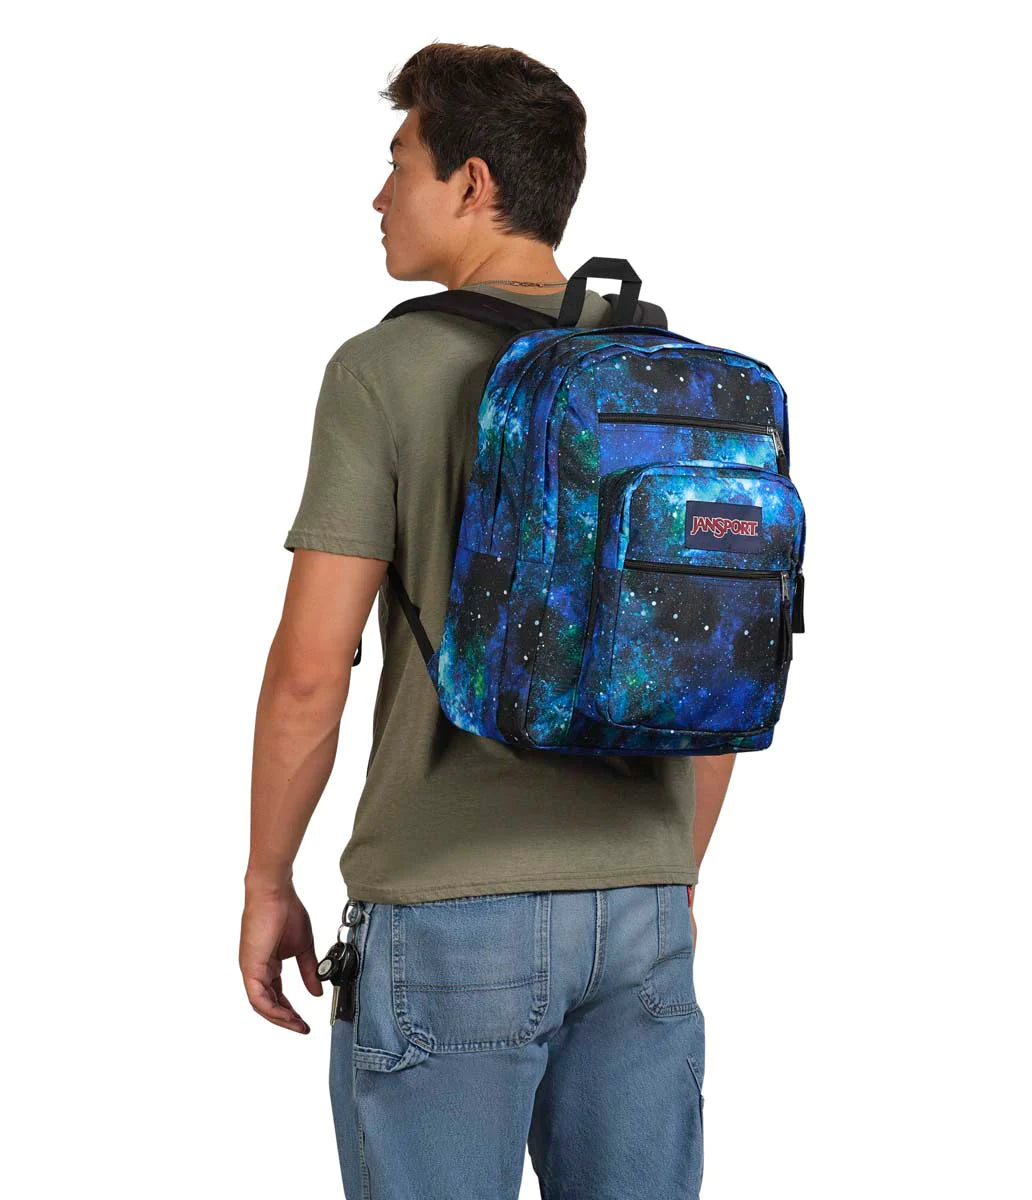 Big Student Backpack-Backpack-Jansport-Cyberspace Galaxy-SchoolBagsAndStuff